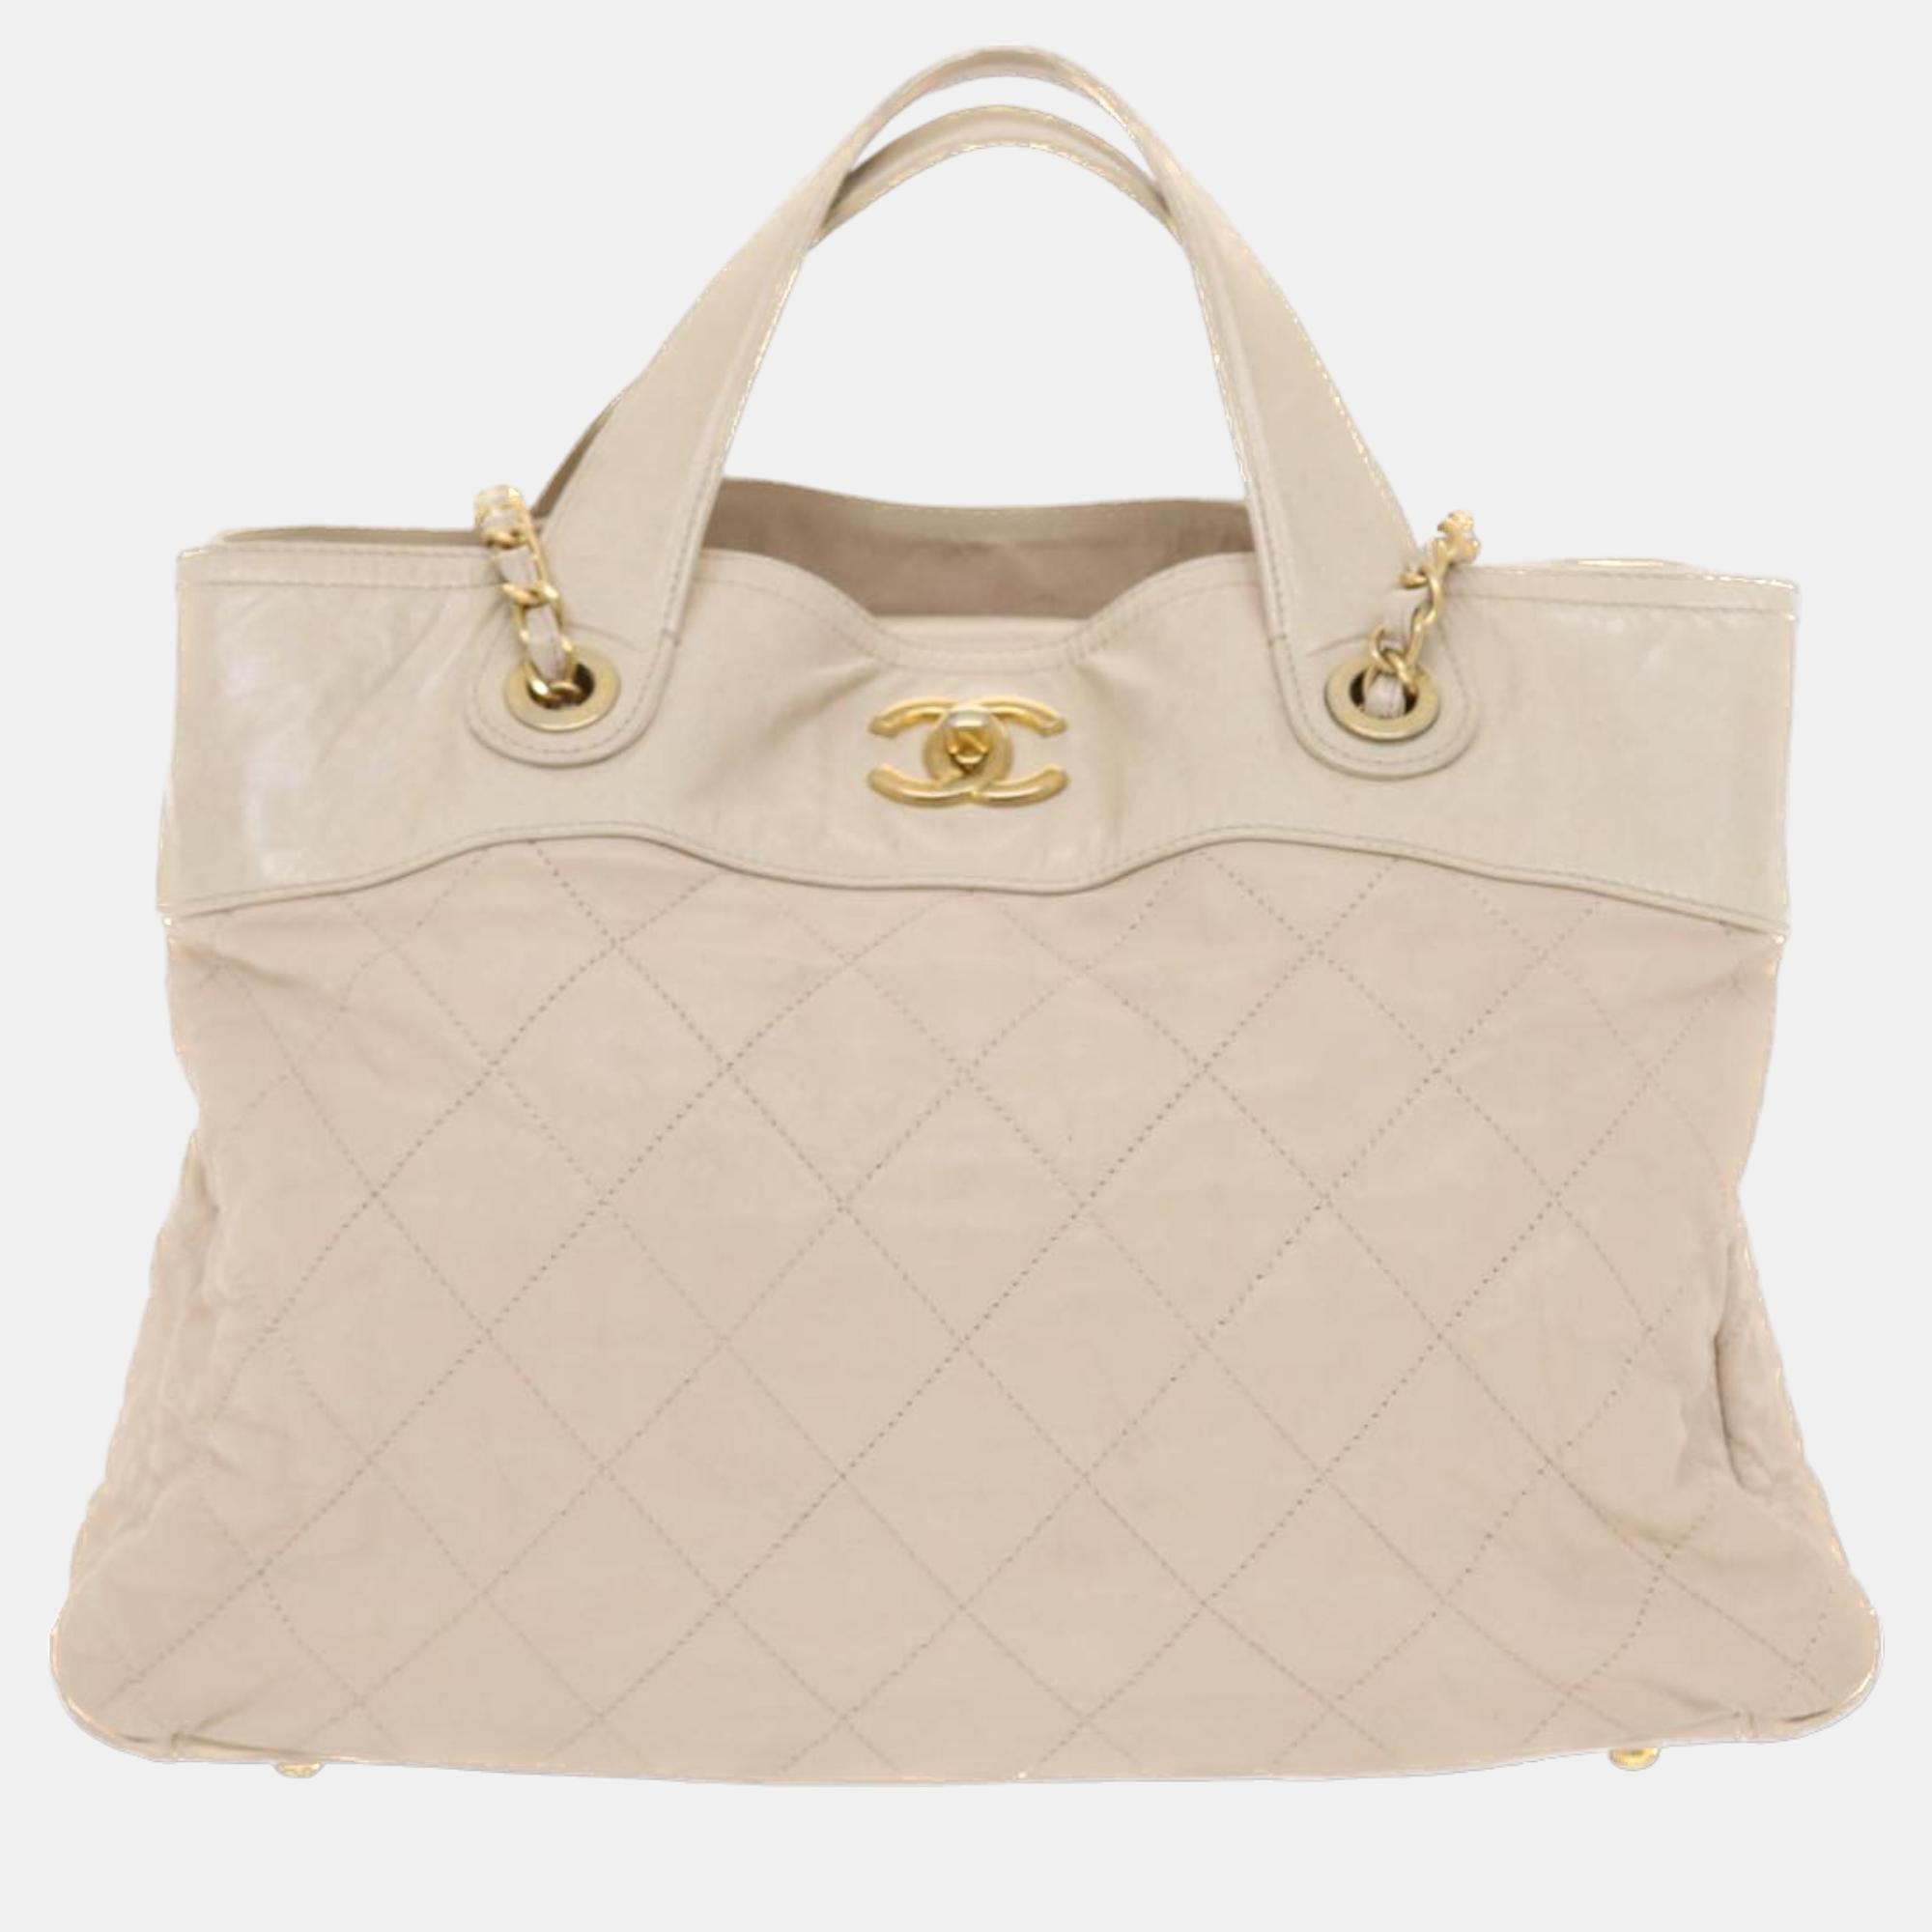 Chanel Beige Leather CC Bag